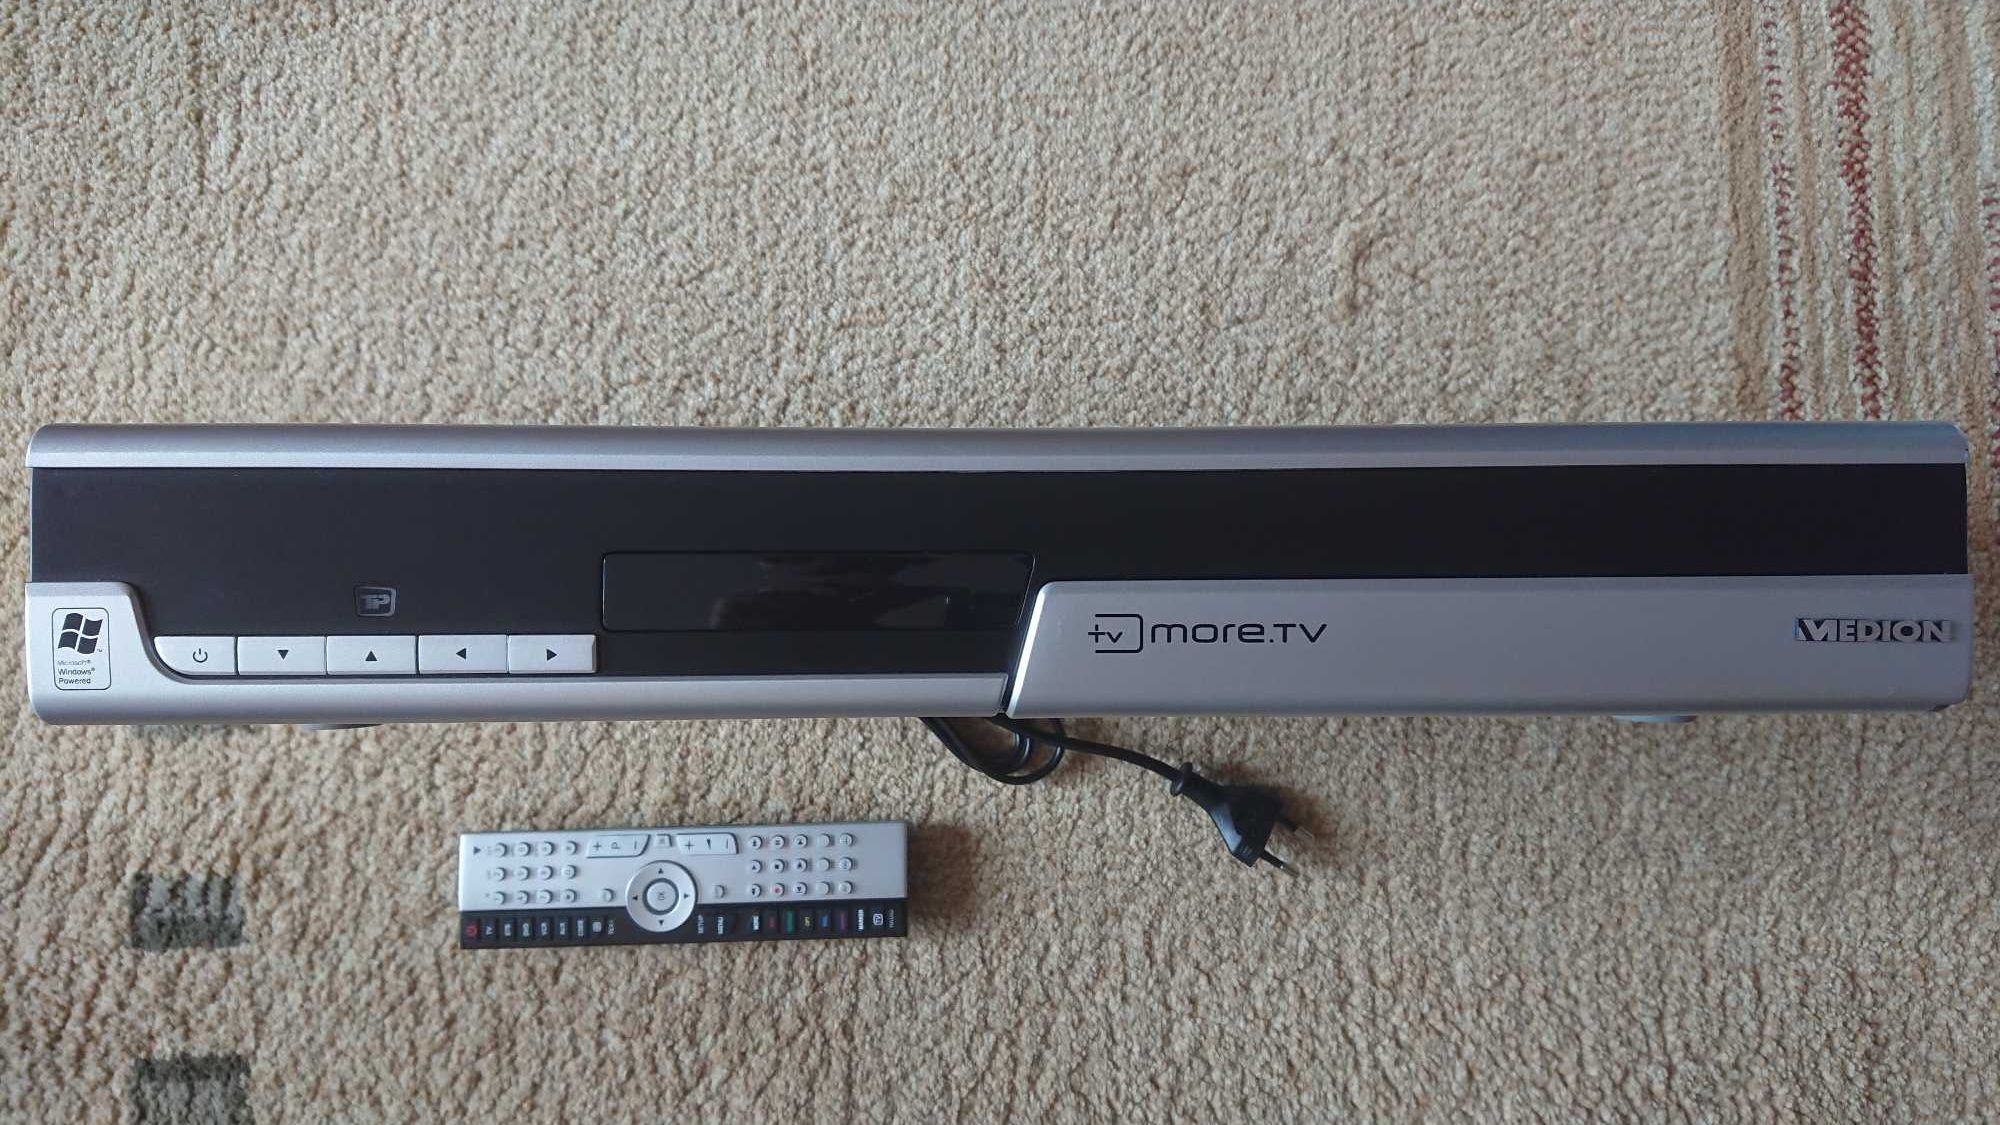 Tuner DVB-T Digital Hybrid Set Top Box Medion MD29052